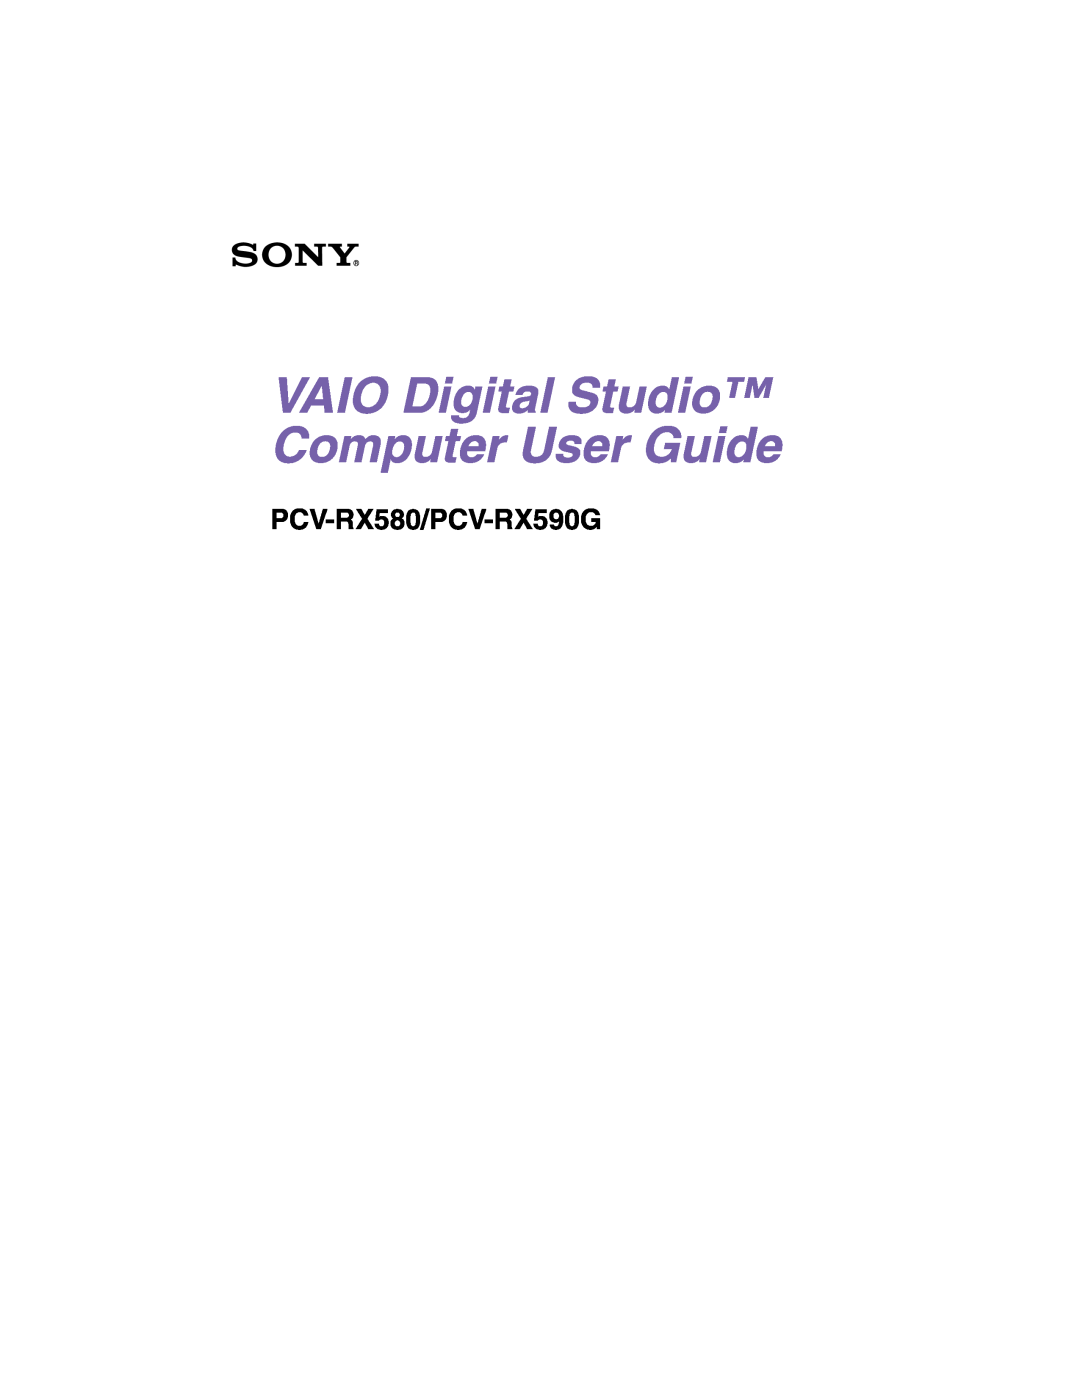 Sony manual VAIO Digital Studio Computer User Guide, PCV-RX580/PCV-RX590G 